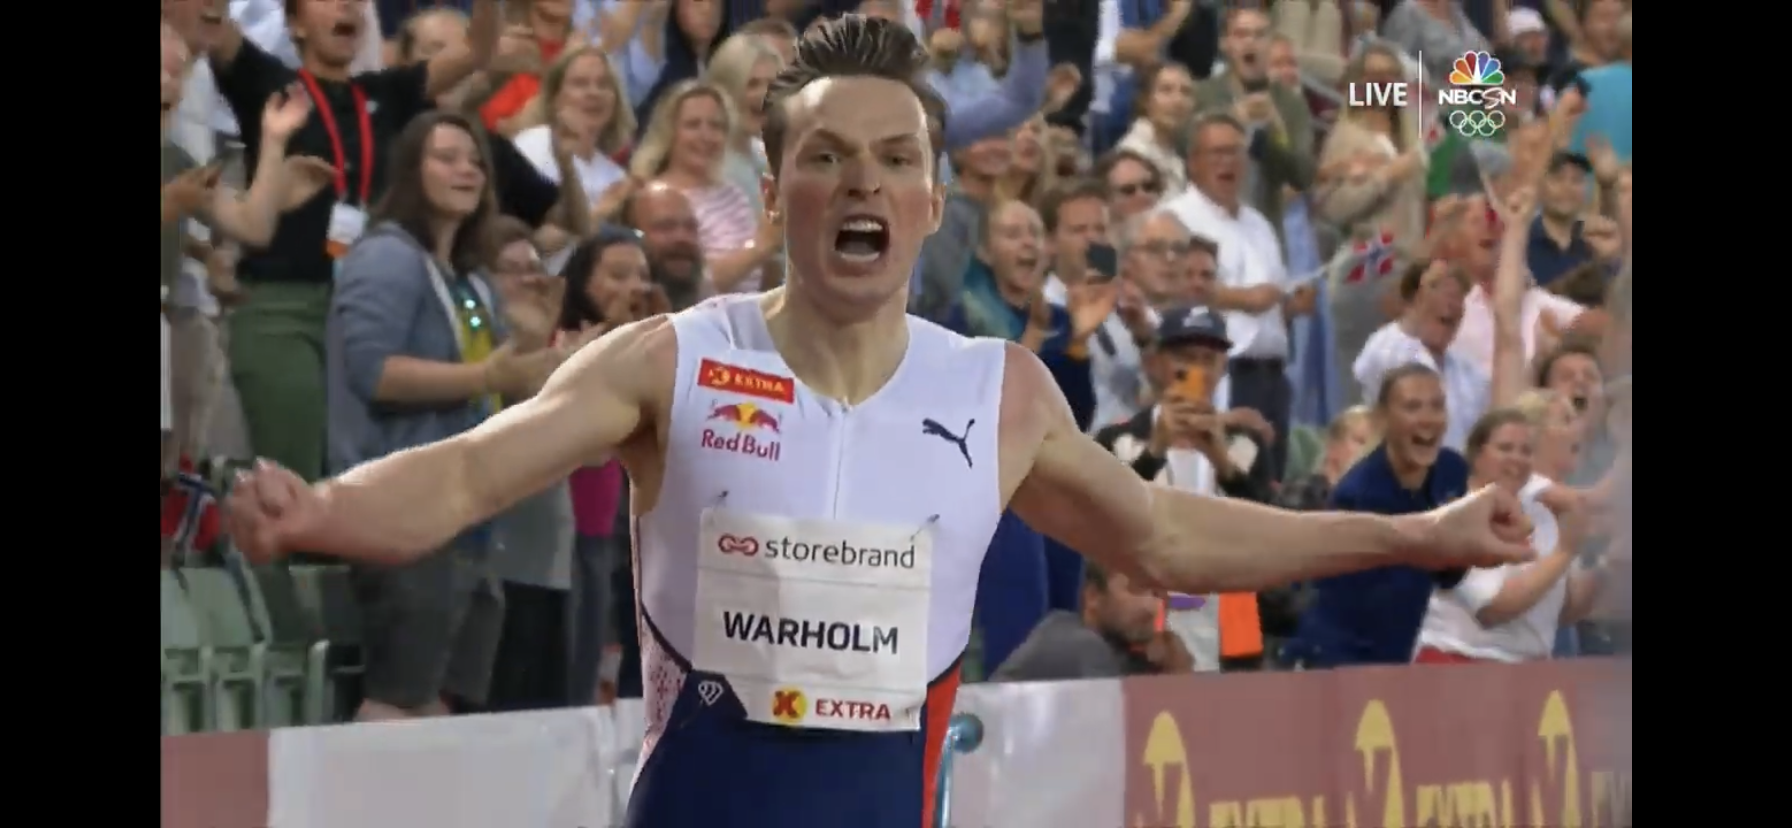 Norway S Karsten Warholm Runs 46 70 To Break 400 Meter Hurdles World Record On Home Soil In Oslo Letsrun Com